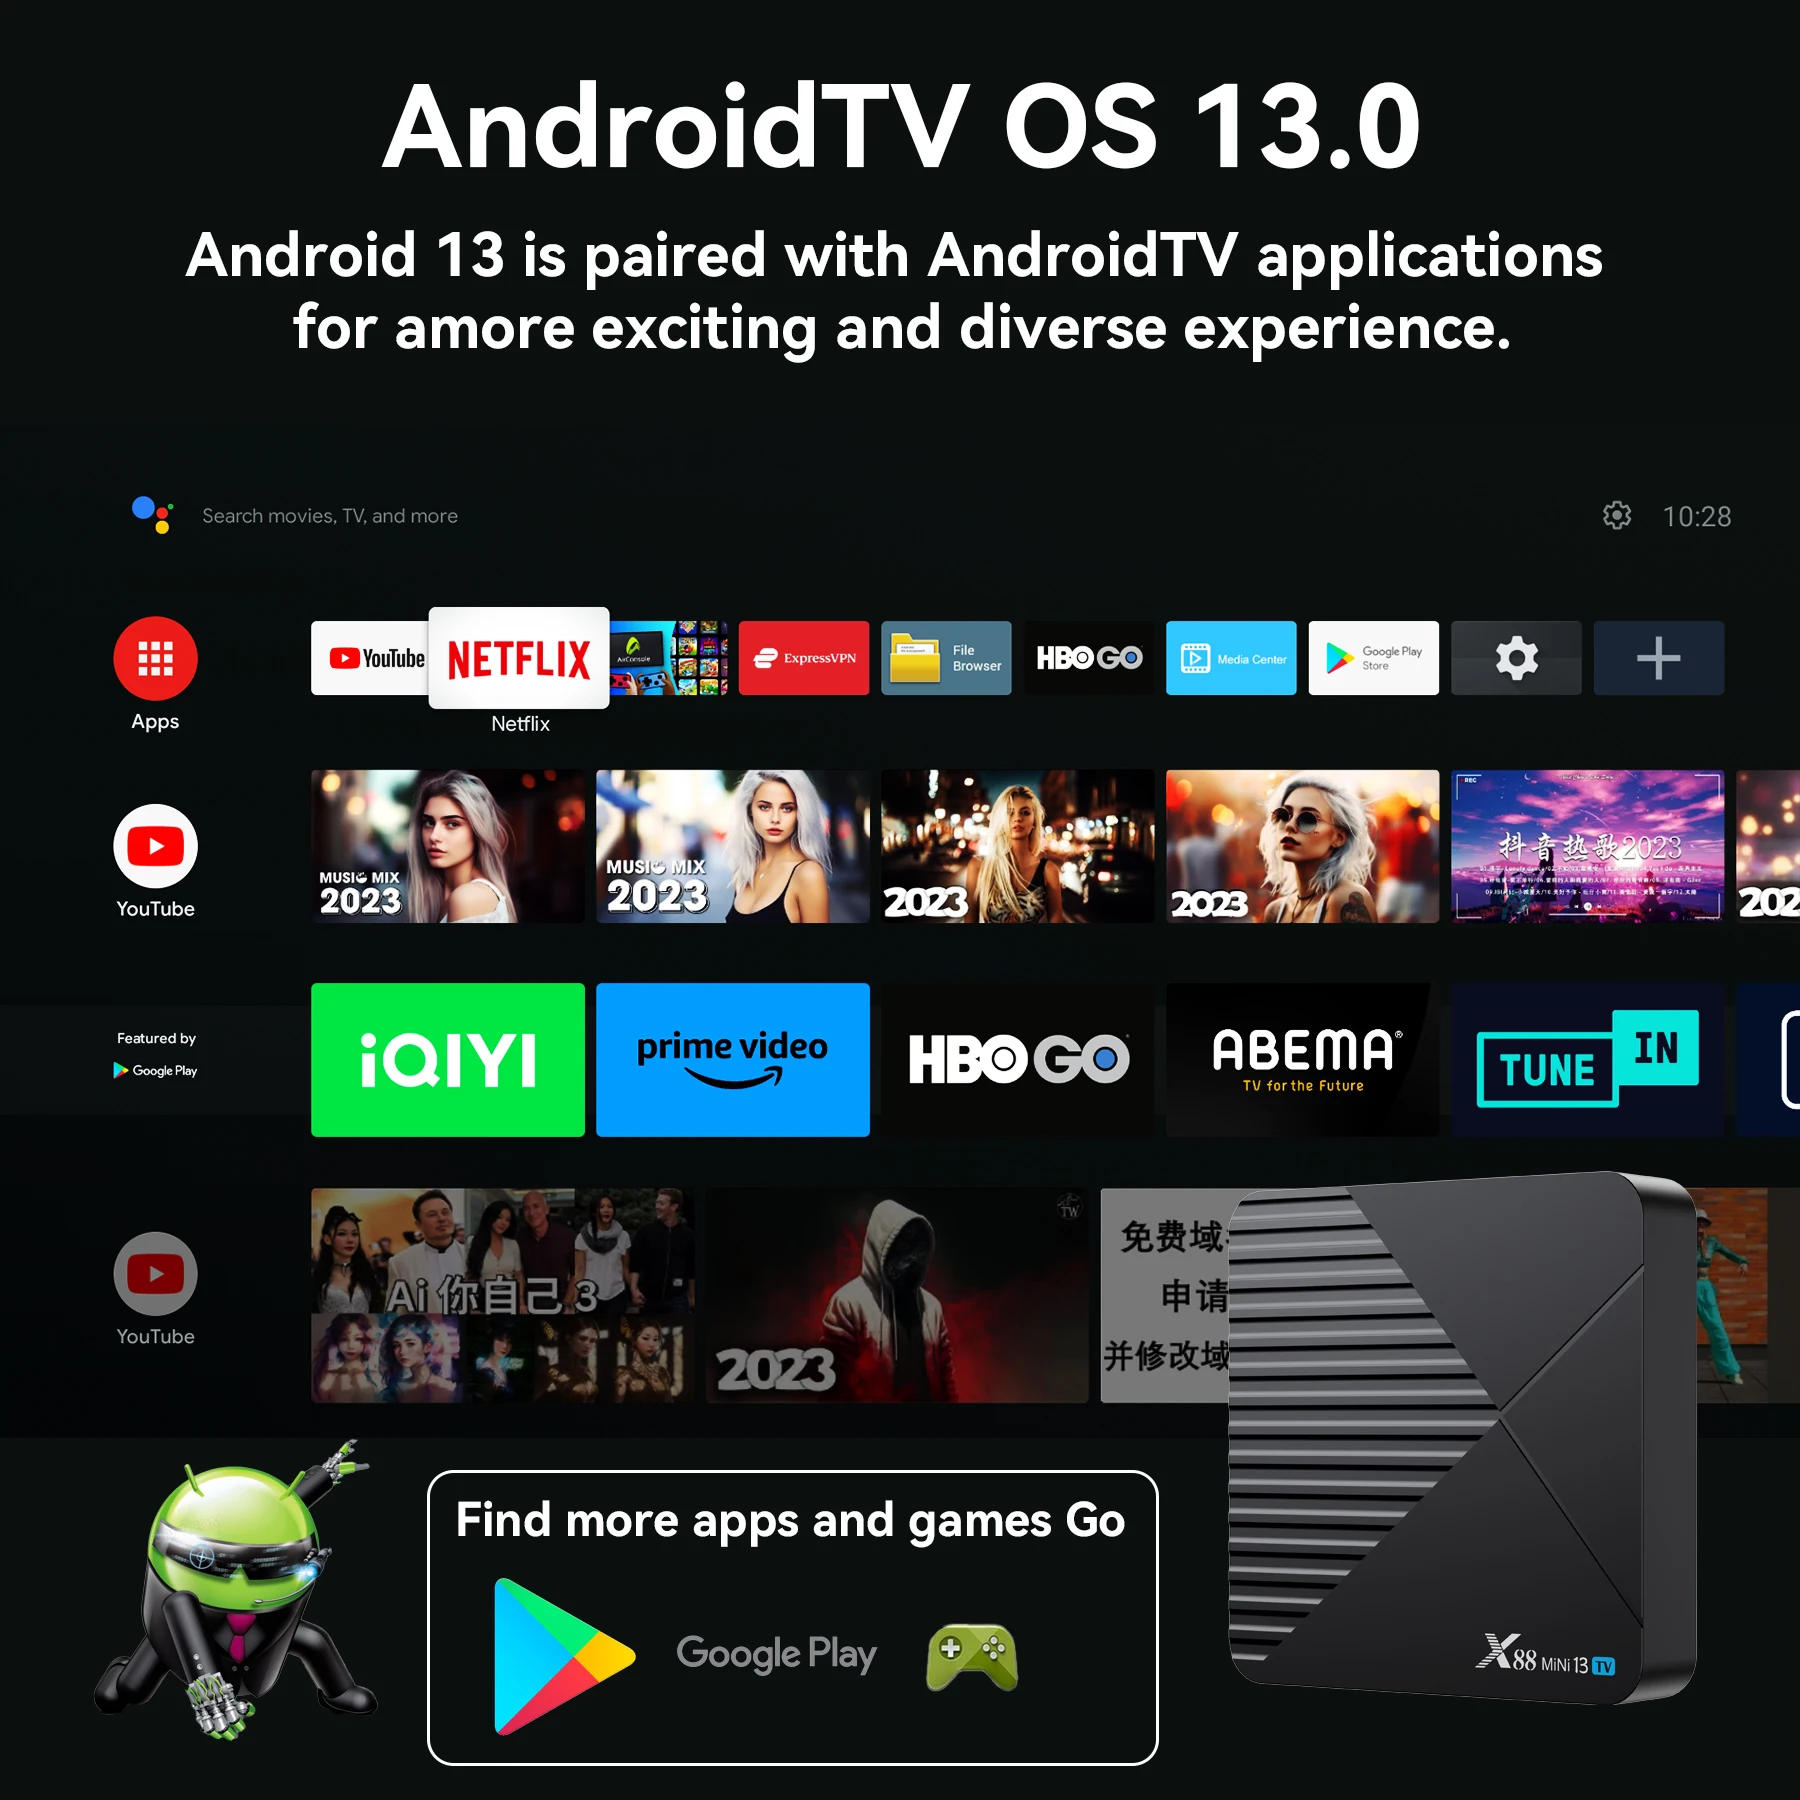 LEMFO 2023 Новый X88 Mini13 Android 13.0 Smart TV Box RK3528 с Сертификацией Google 8K Vedio Bluetooth 5 WIFI6 Голосовой Помощник